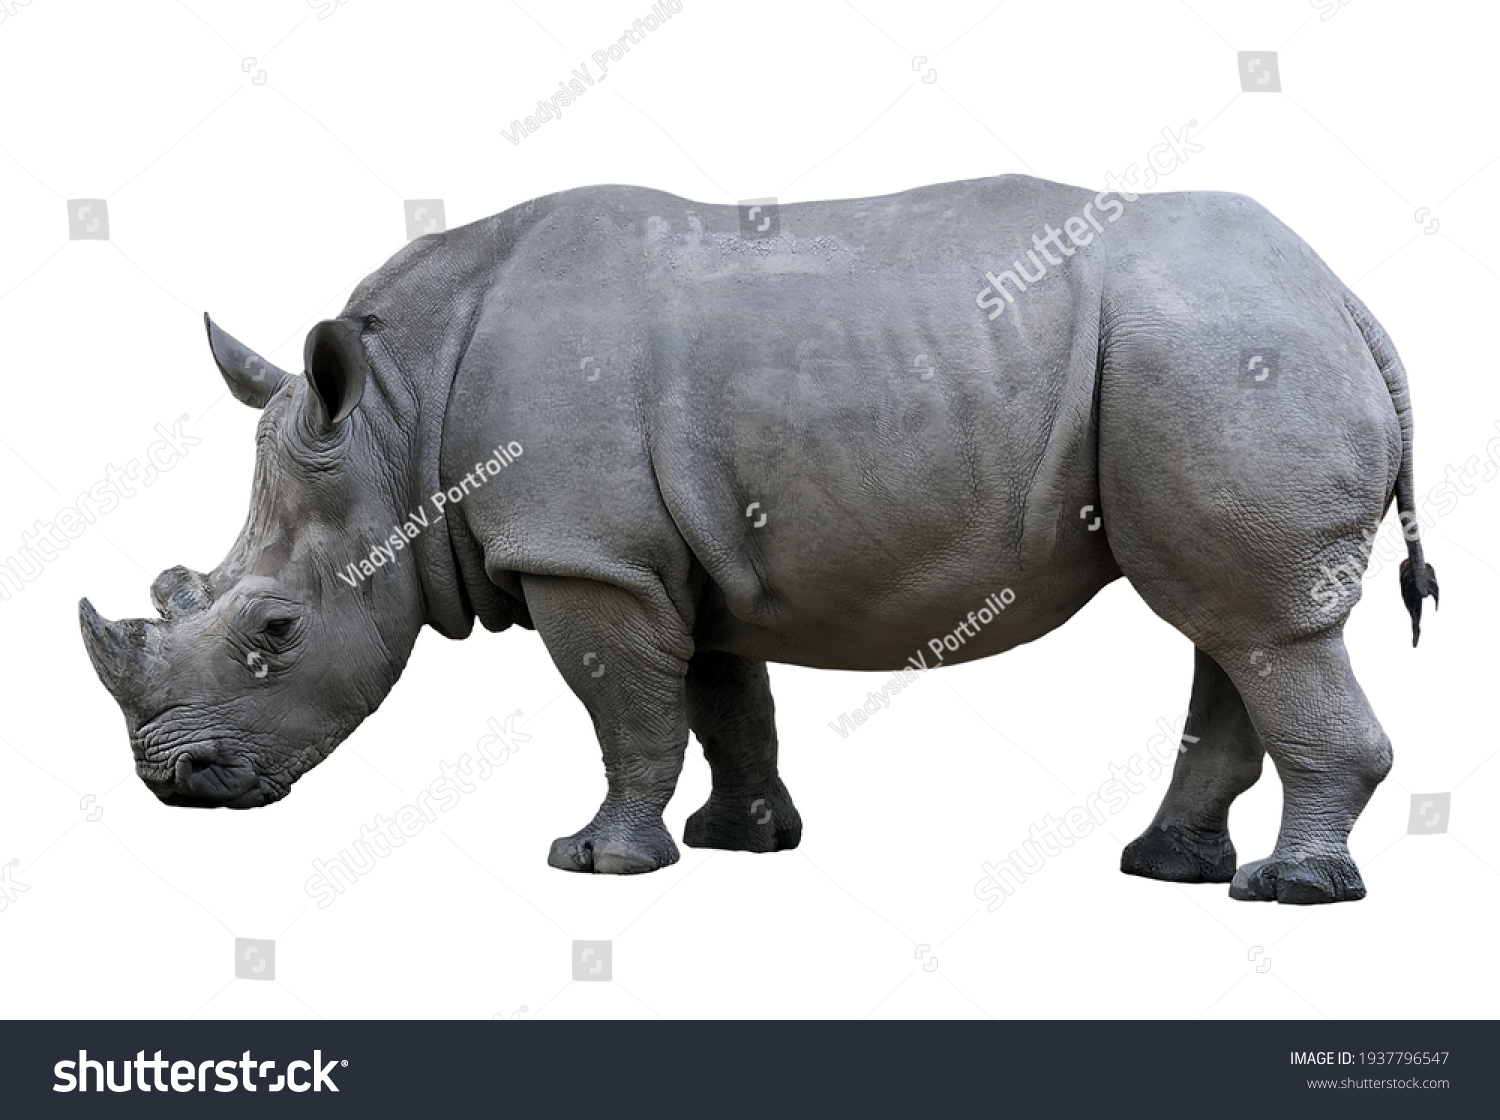 Rhino nose horn isolated on white background #1937796547